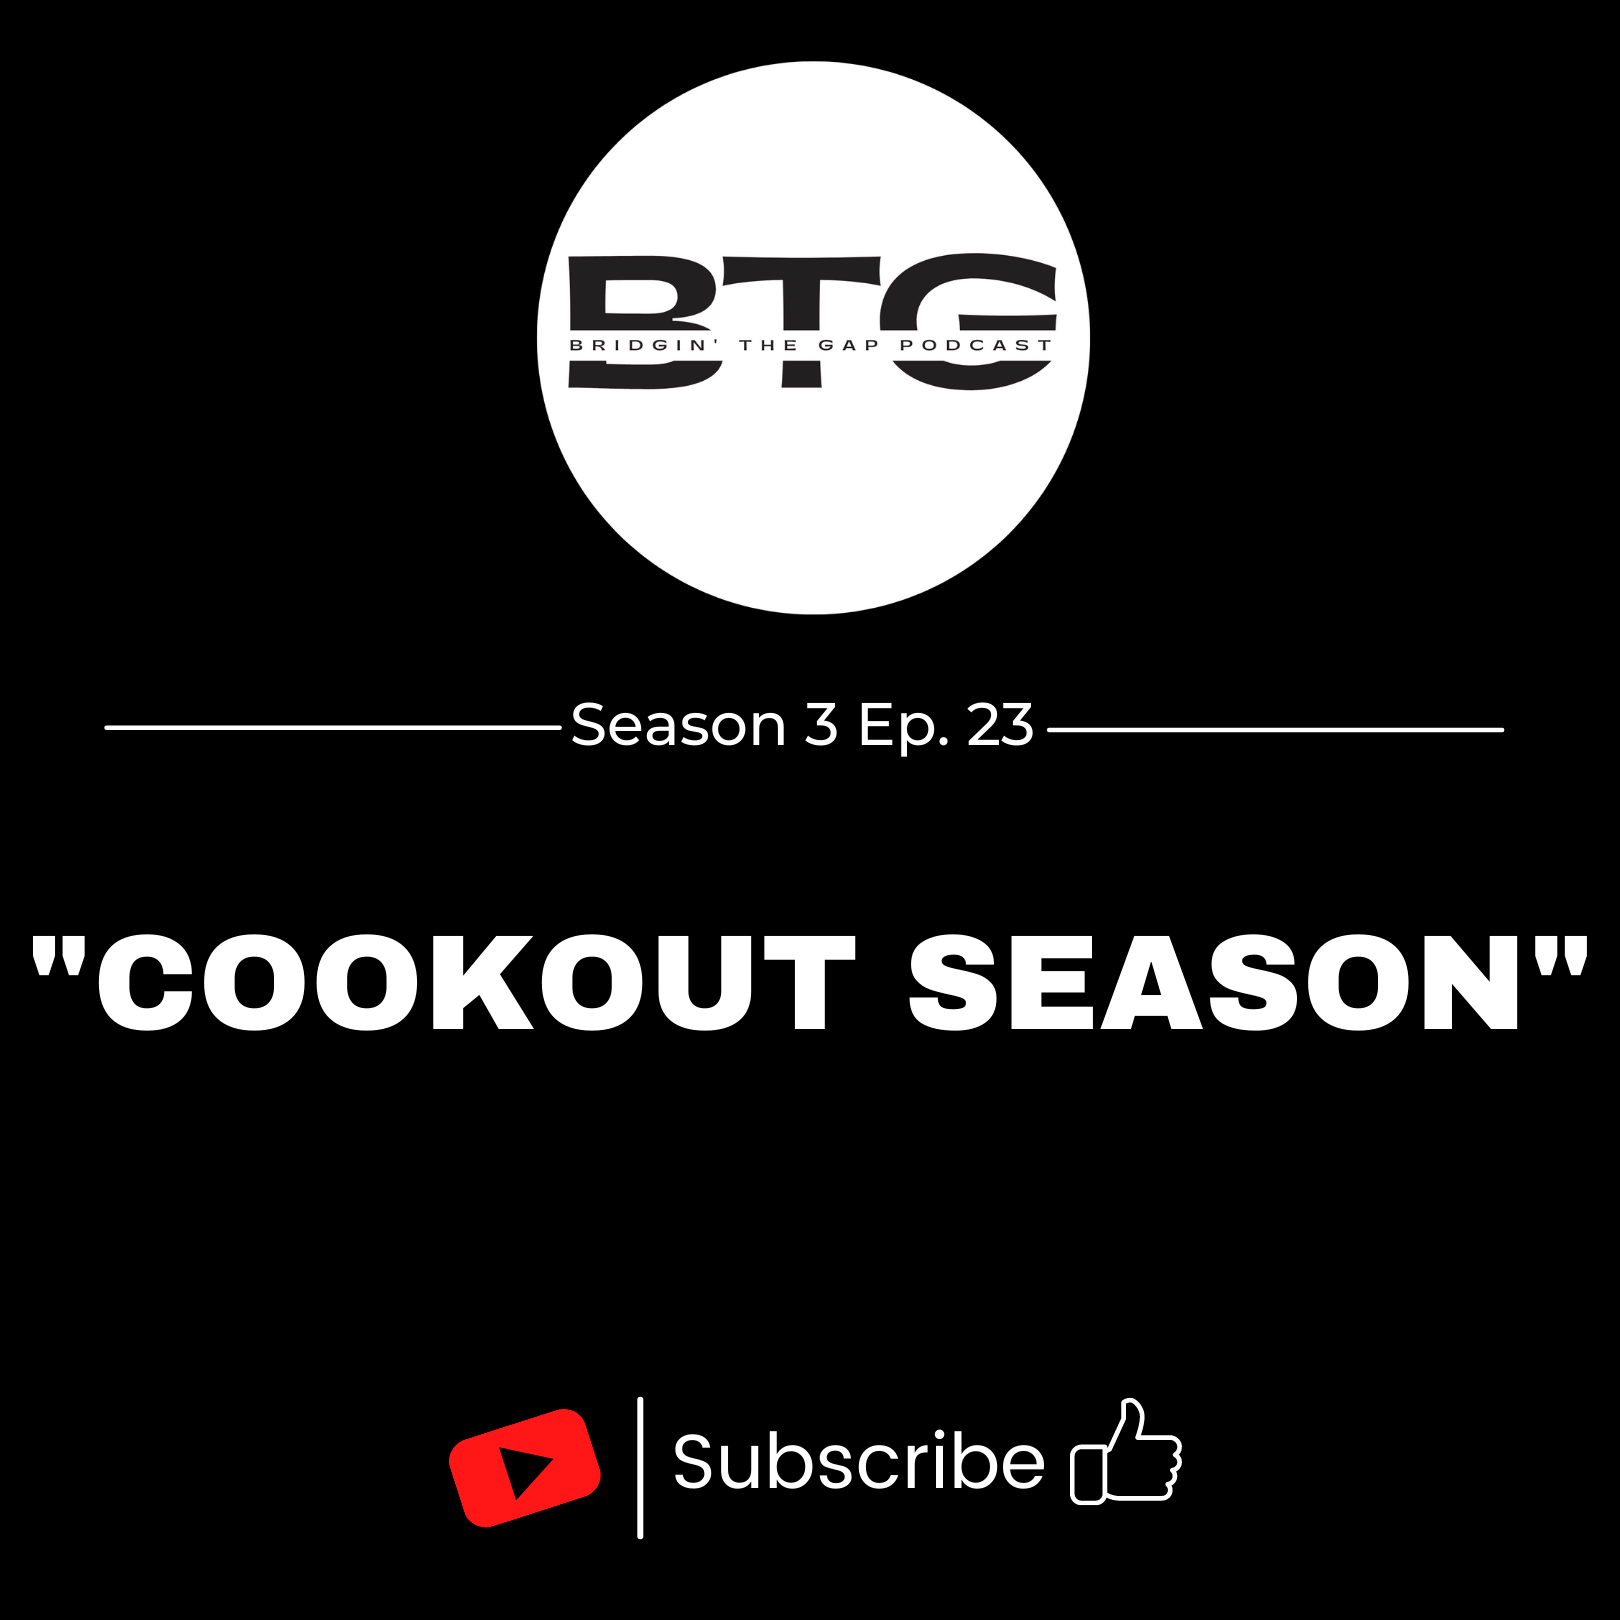 Bridgin' The Gap Podcast  Season 3 Ep. 23 “Cookout Season”